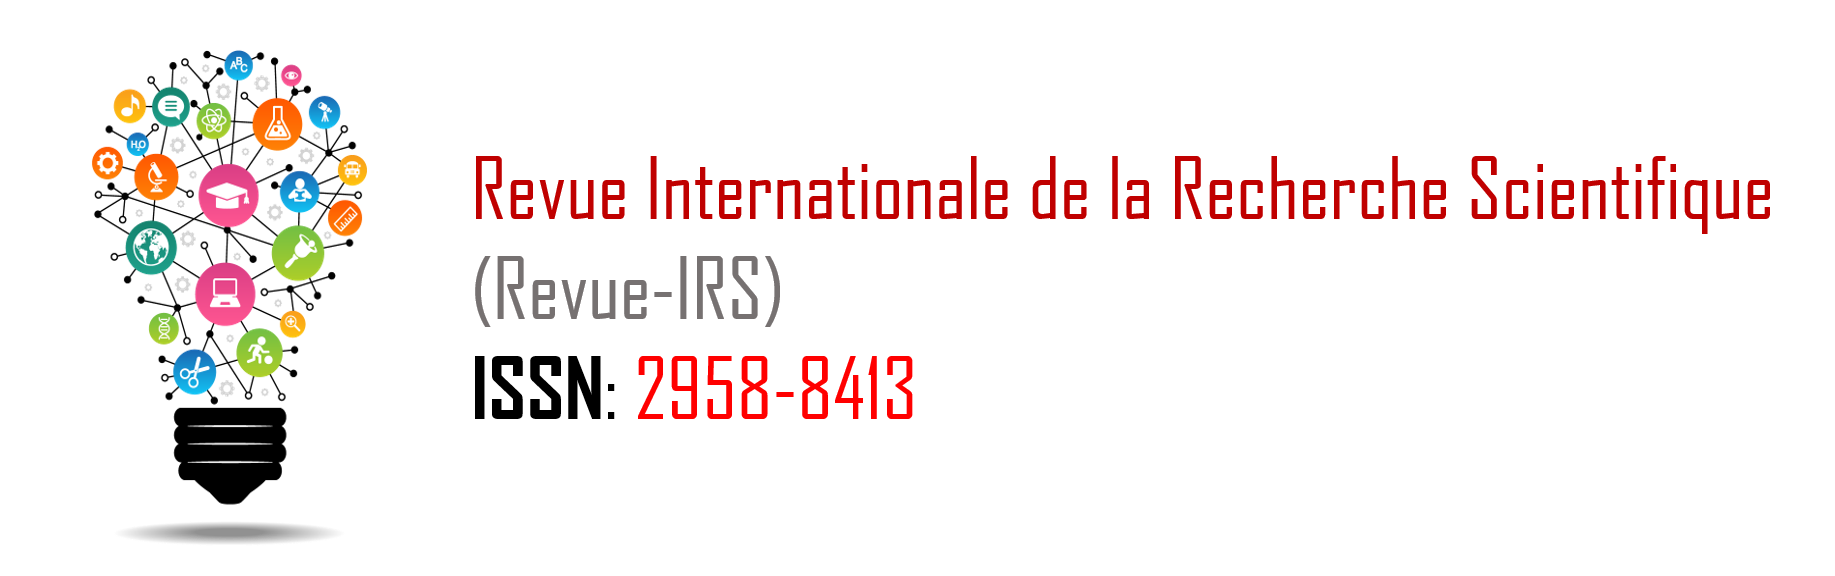 Revue-IRS logo